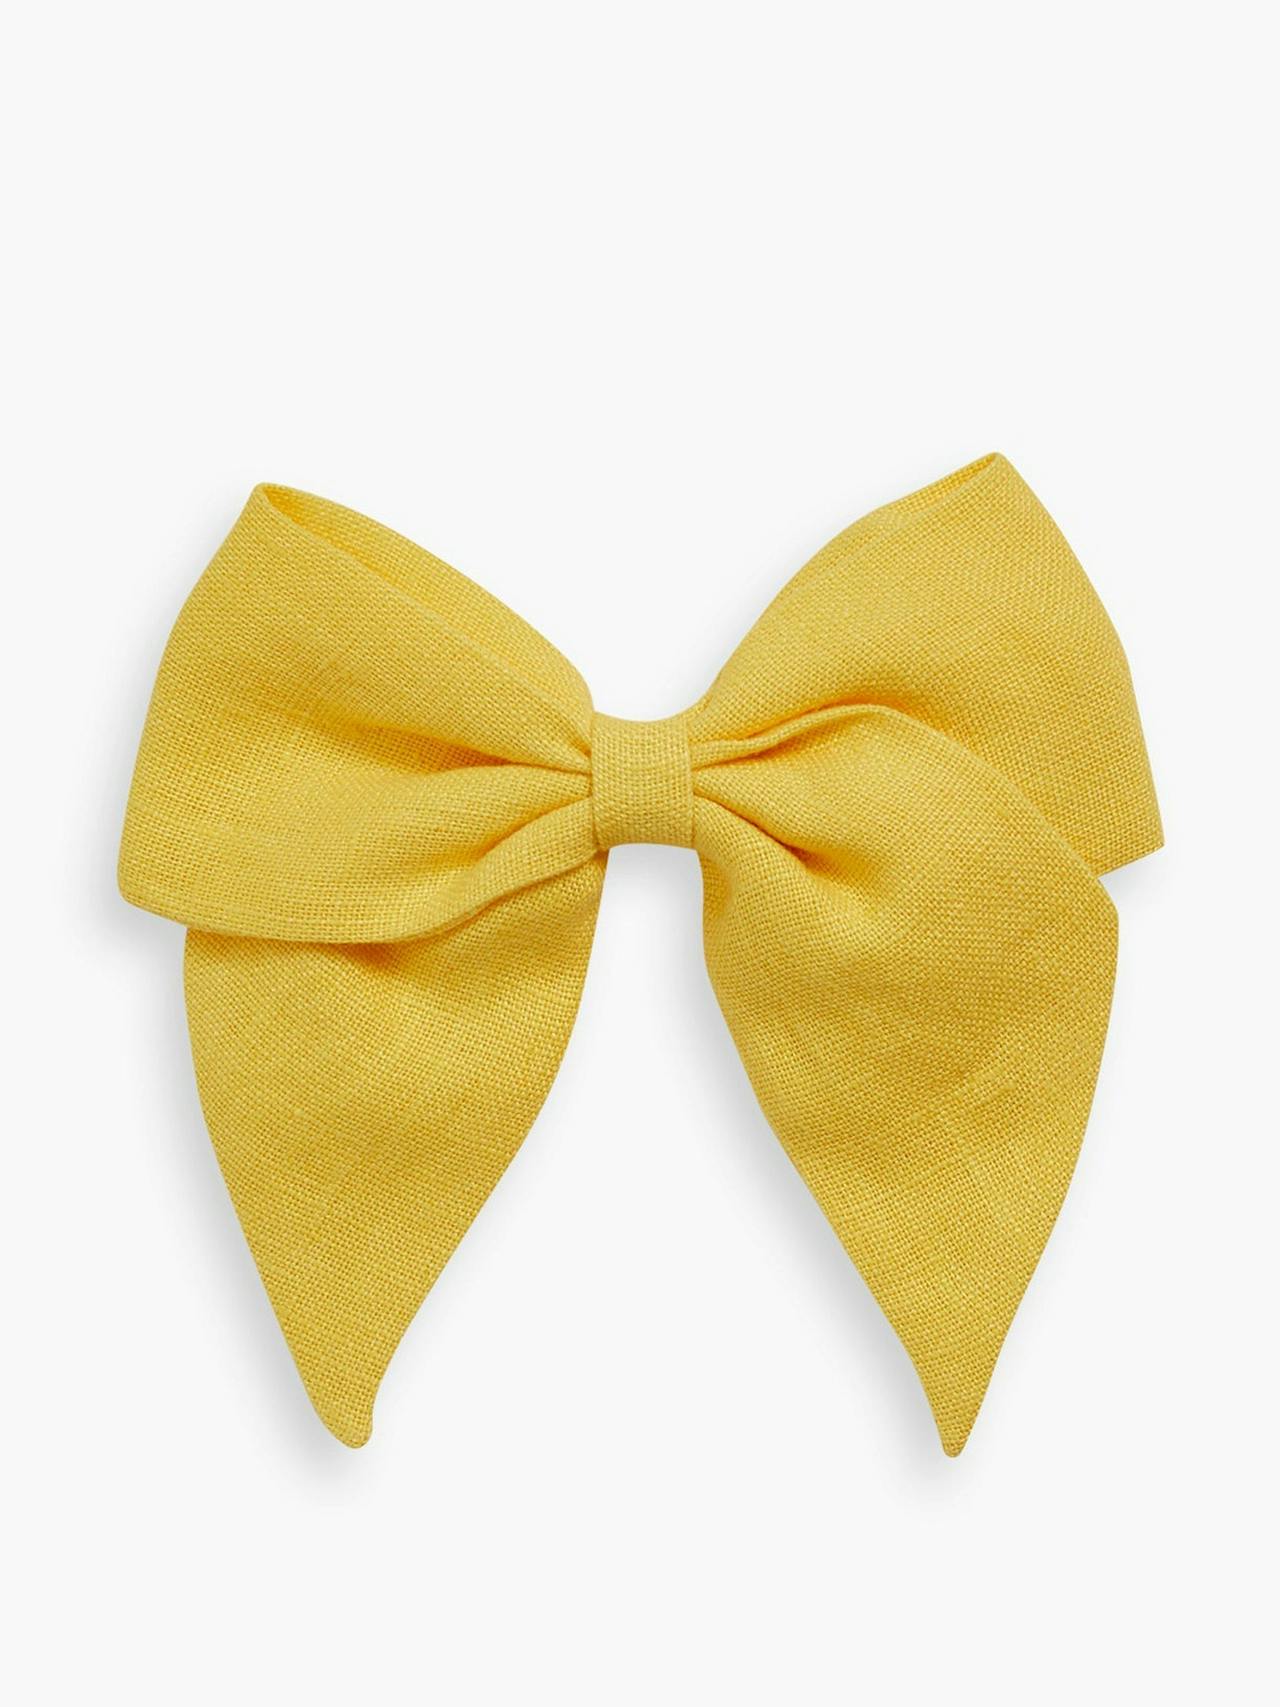 Sunny yellow linen sailor bow